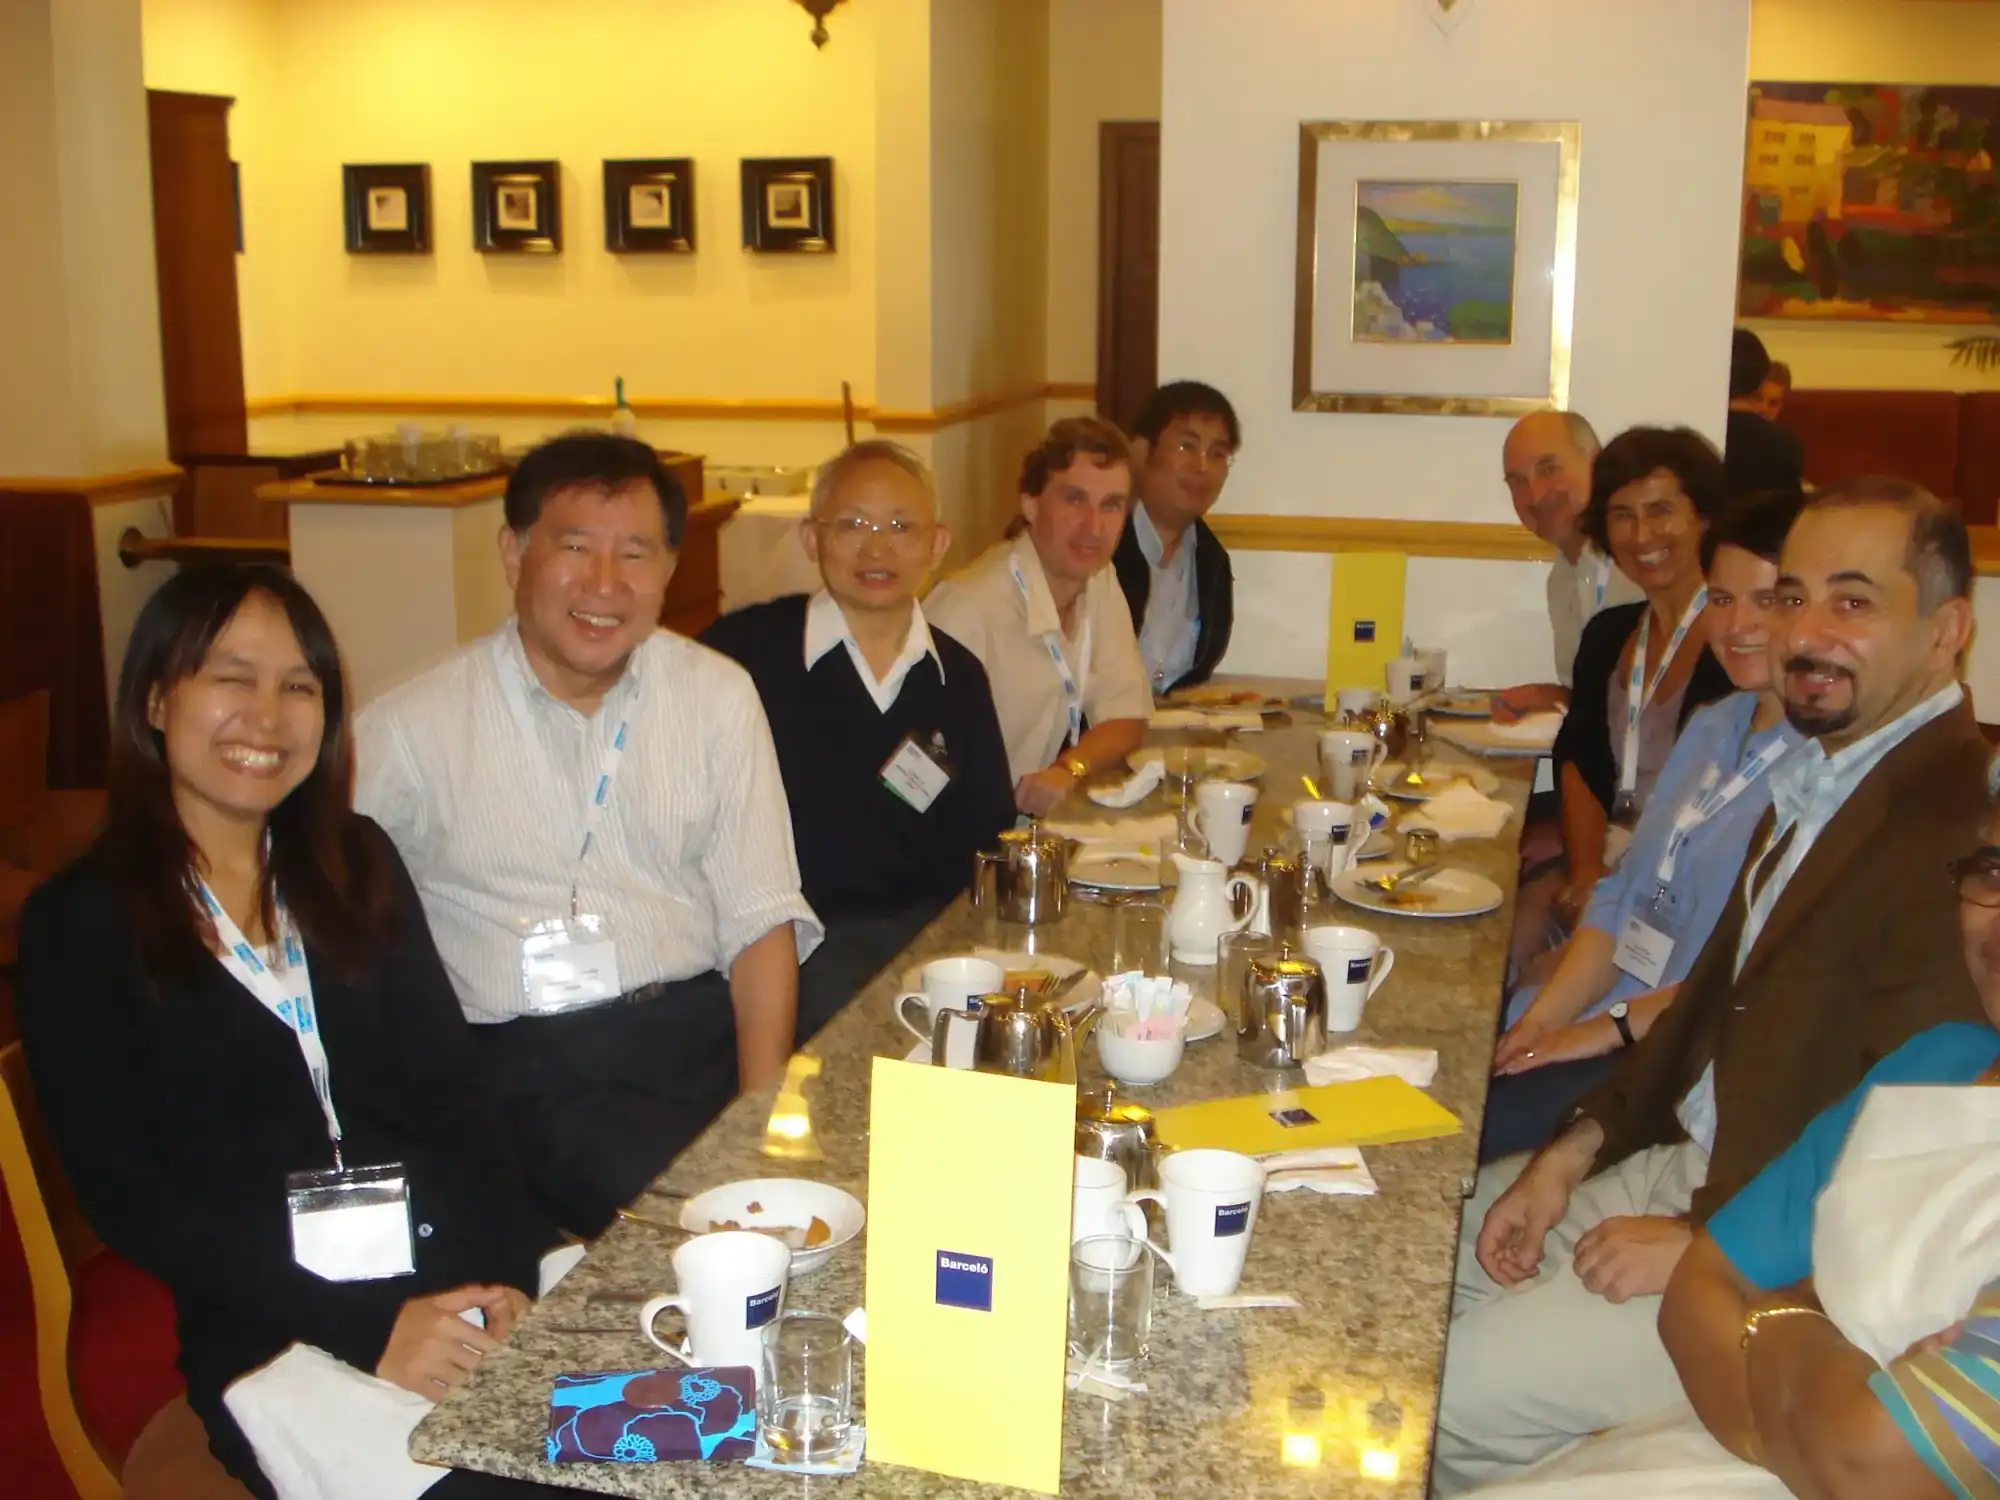 Interspeech 2009於Bryton(英國)，李教授以ISCA Board Member身份主持International Affairs Breakfast，討論內容主題就��是後來的「地理開拓計劃」。其中右四為當時ISCA President，葡萄牙的Isabel Trancoso，其餘由左至右分別為各國代表：印尼、日本、李教授、俄羅斯、泰國、瑞典、南非、智利、印度，多數為「低度參與地區」國家代表。